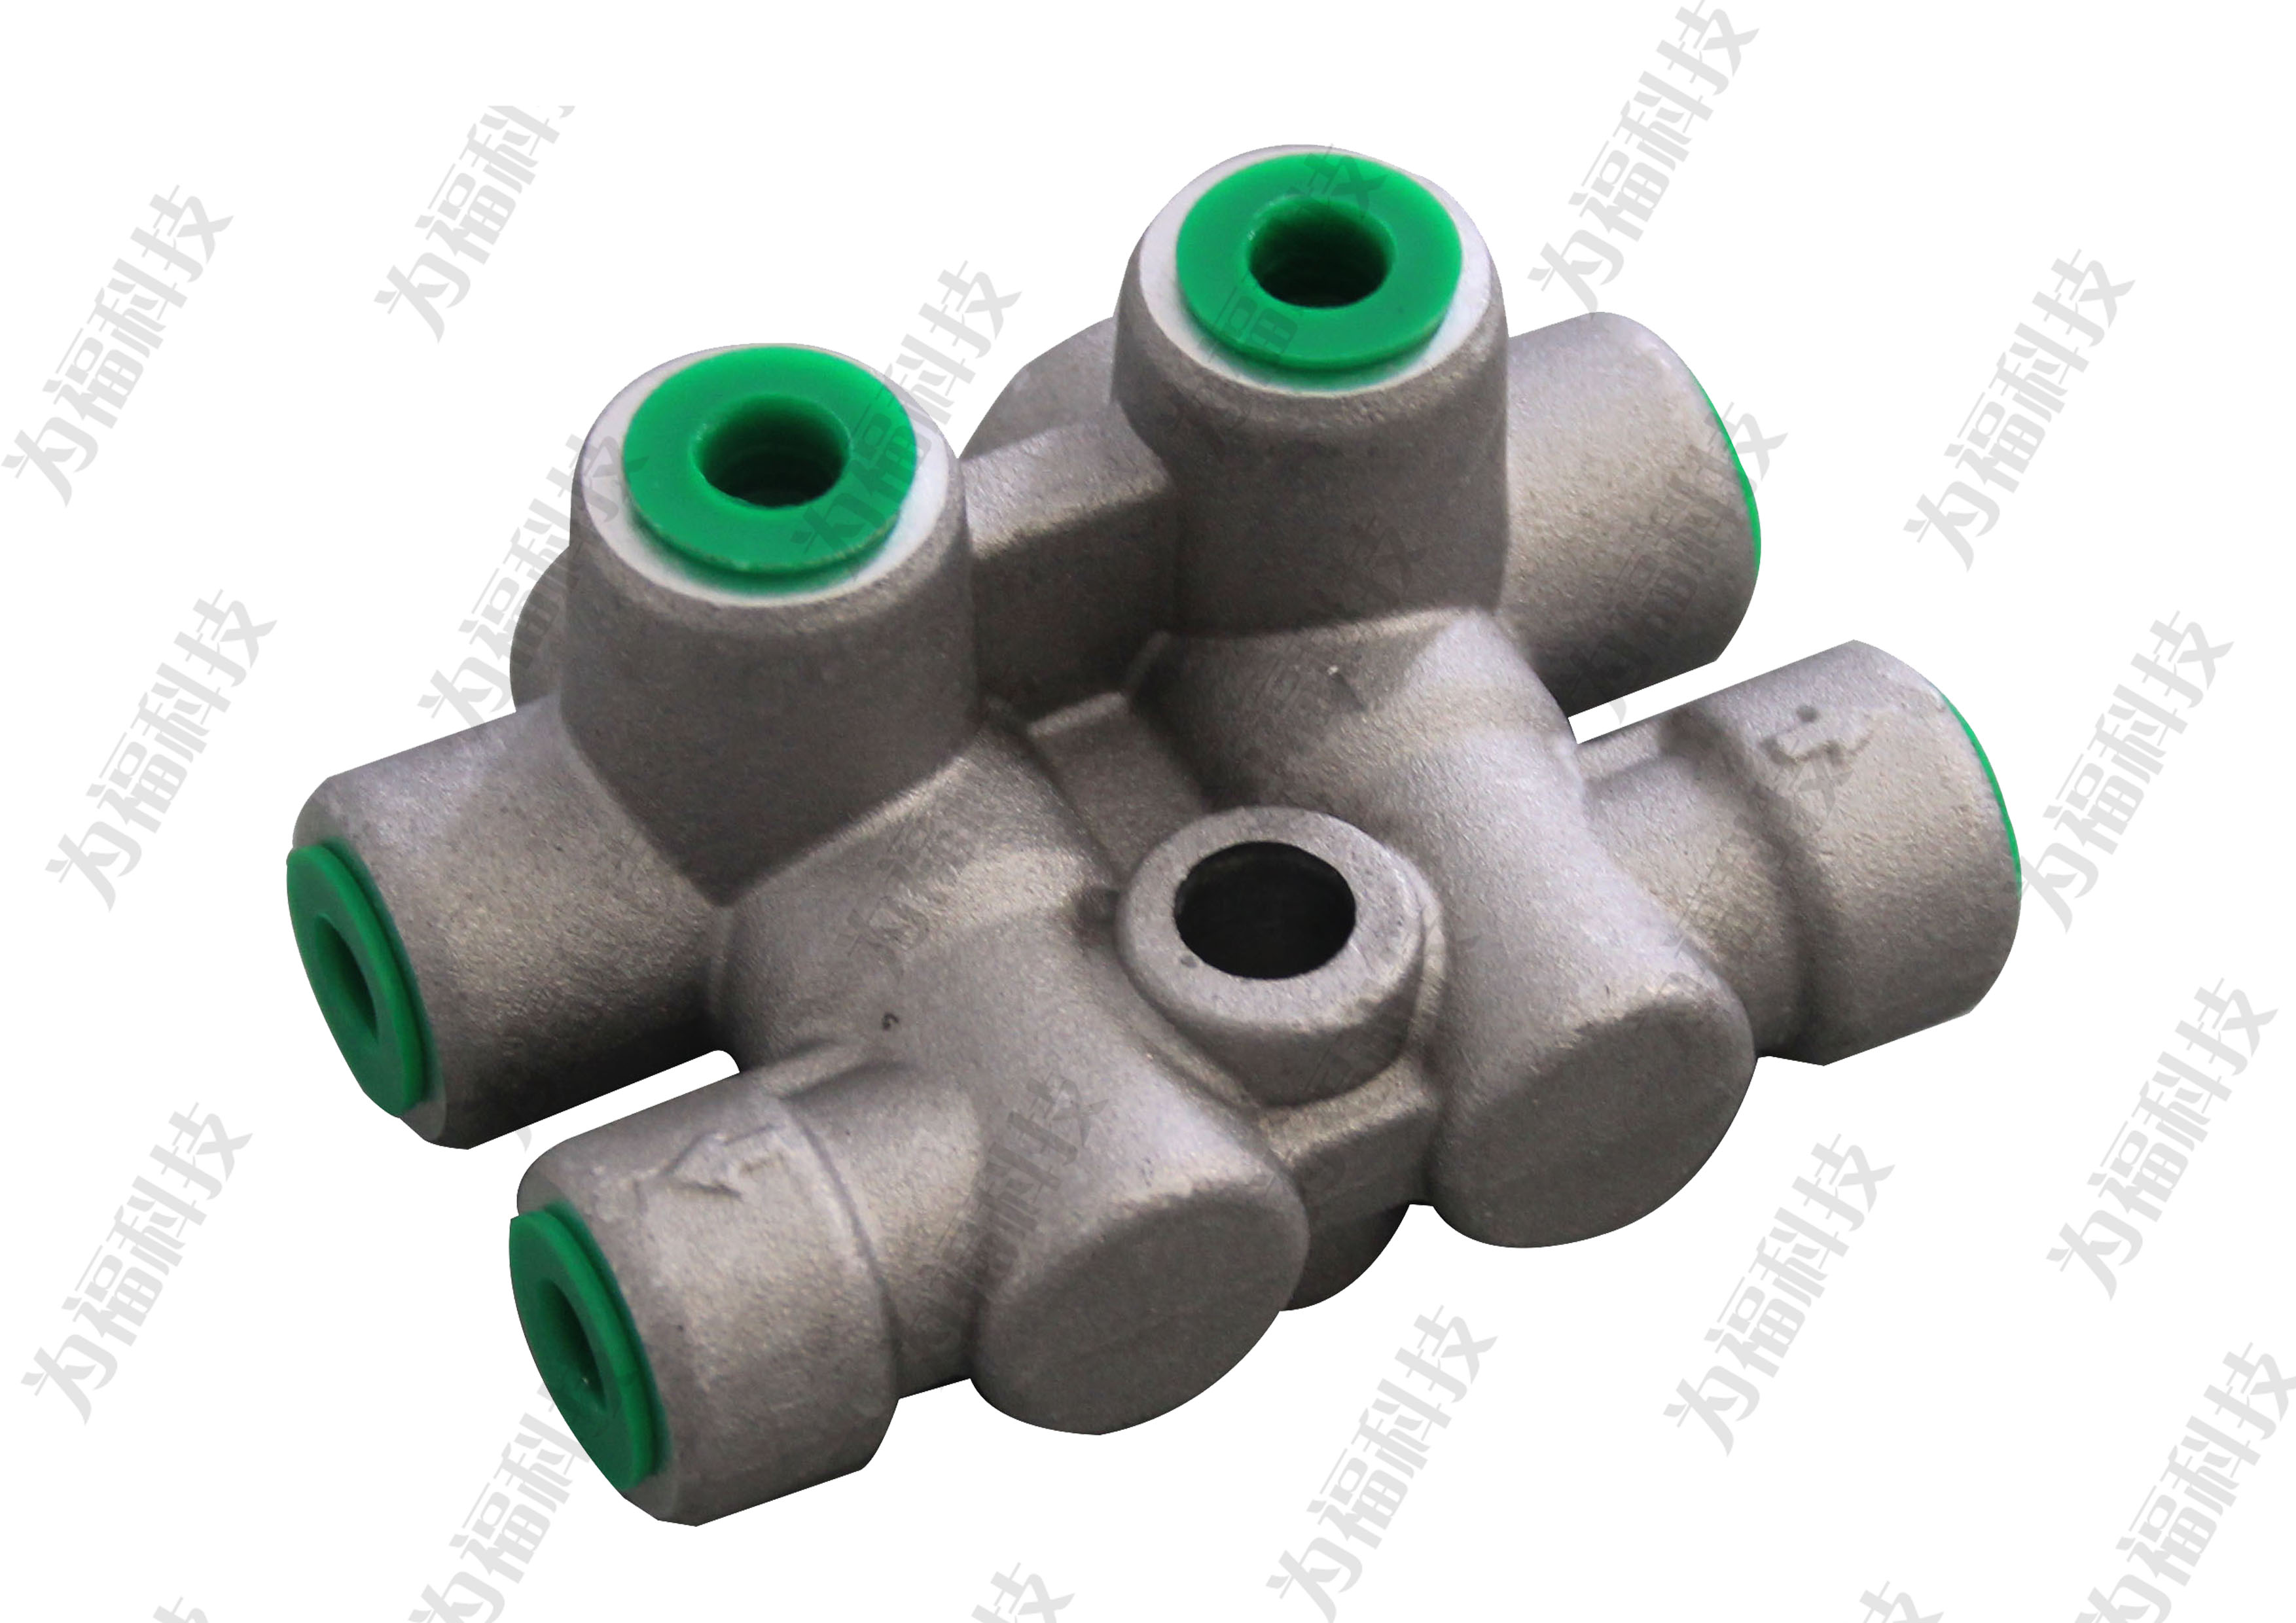 Proportional valve